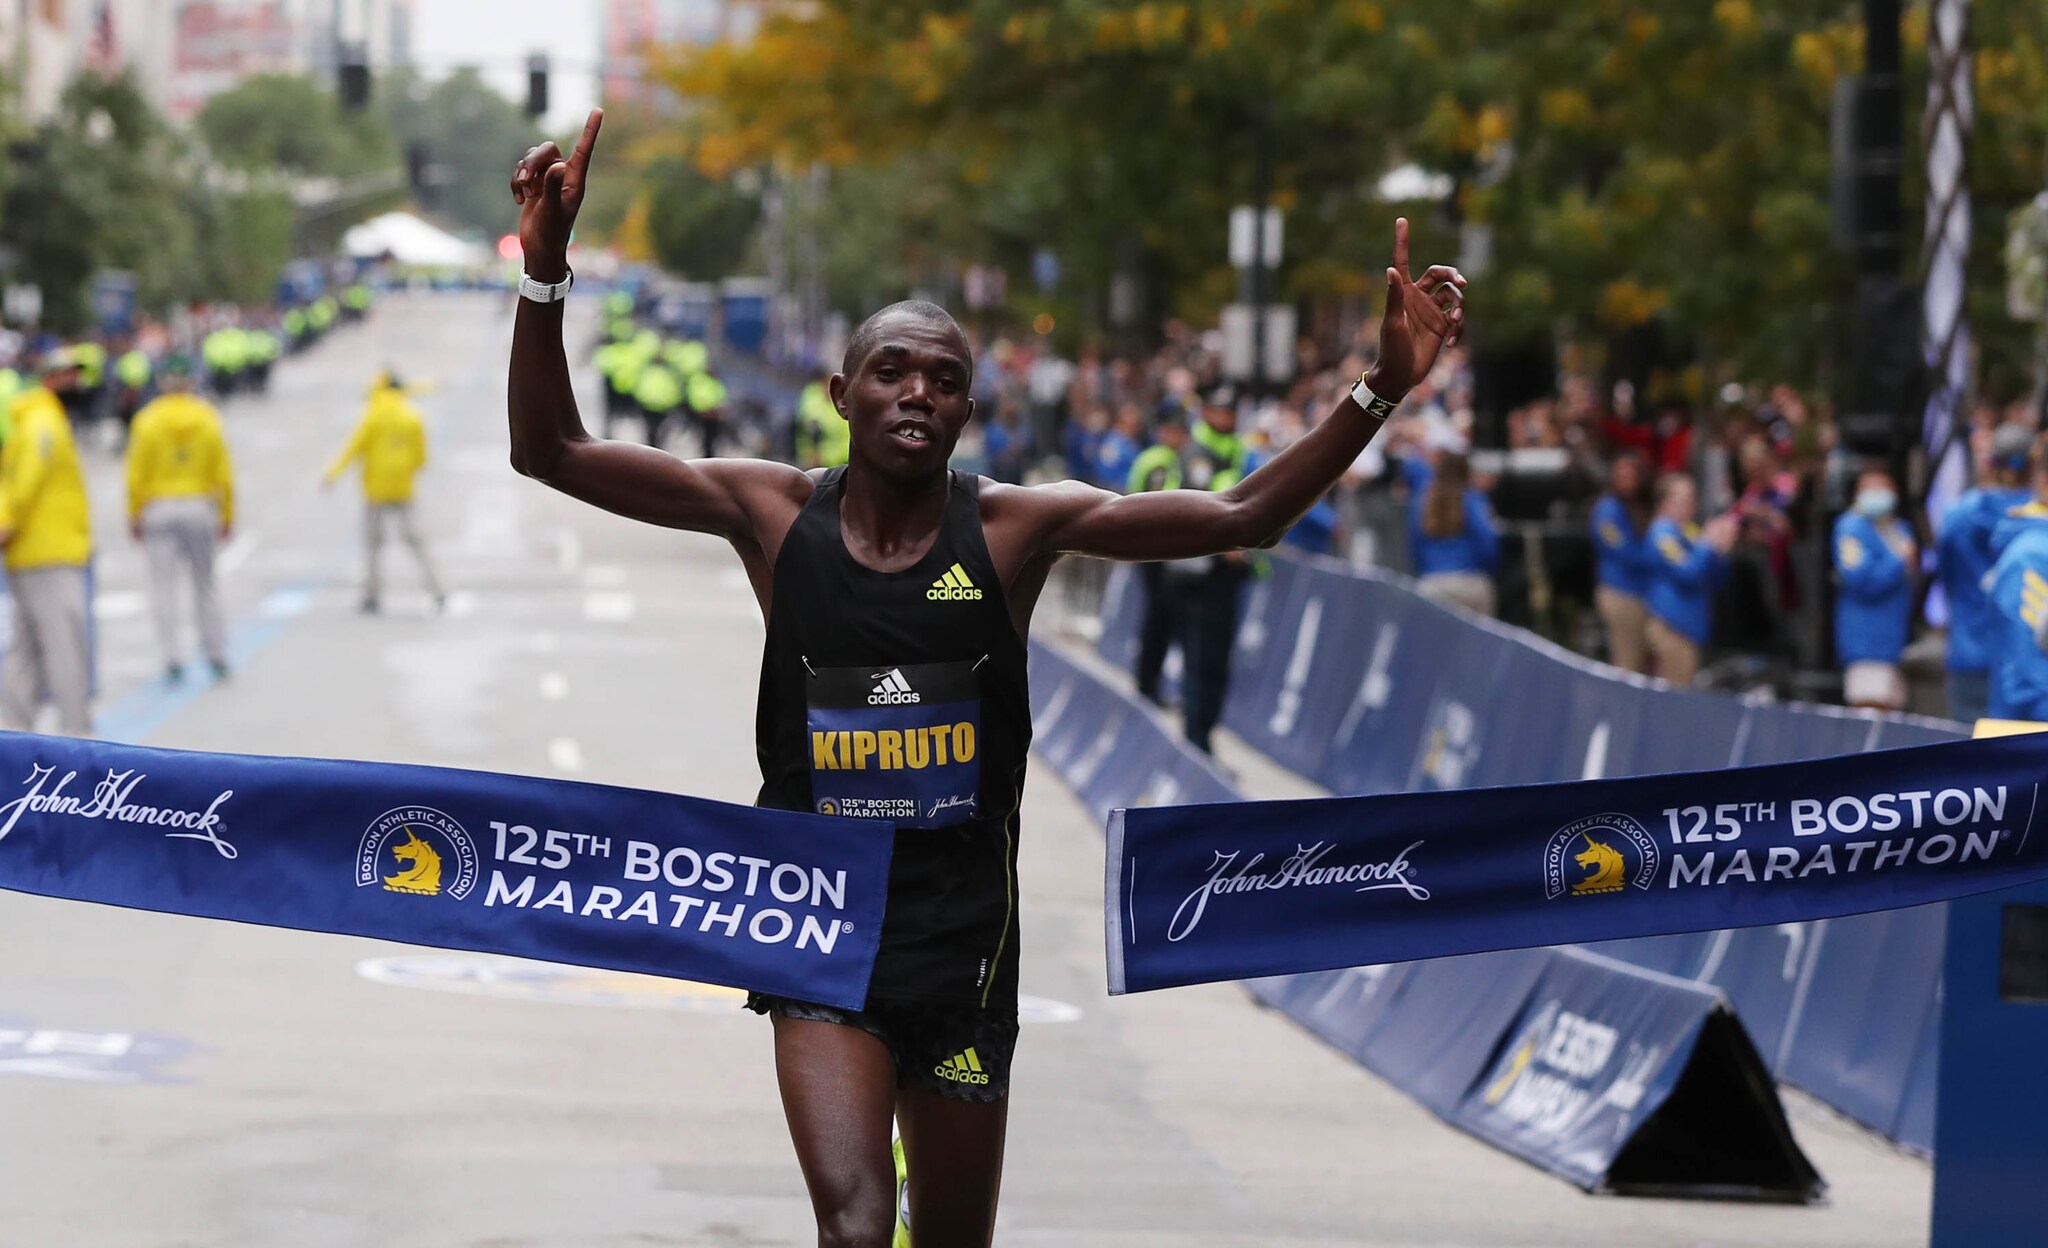 In Photos: Best of the 125th Boston Marathon Race - News18